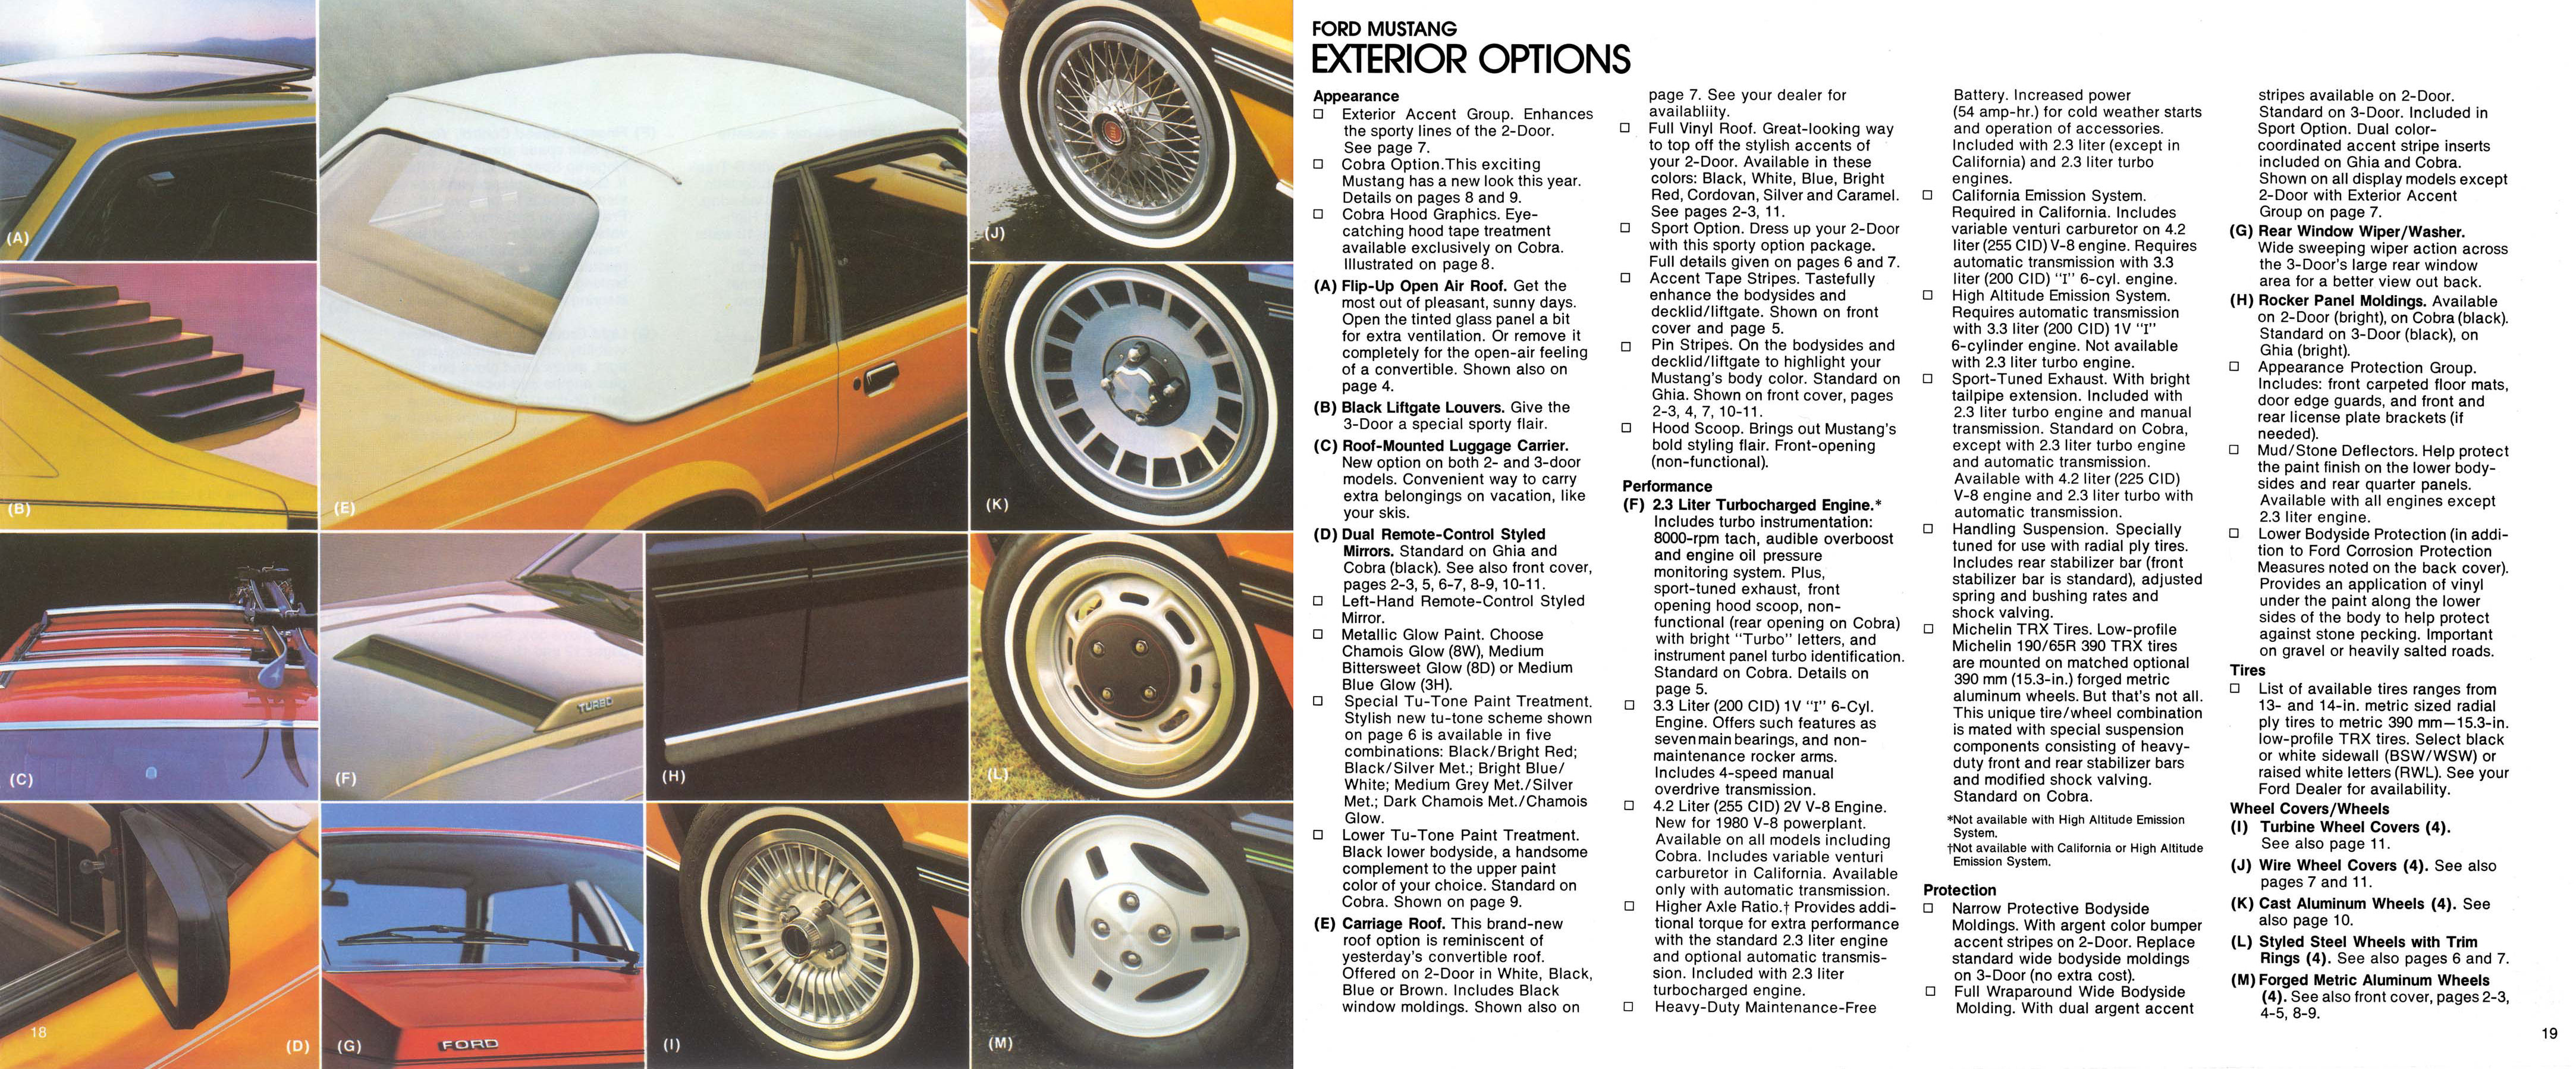 1980_Ford_Mustang_Rev-18-19